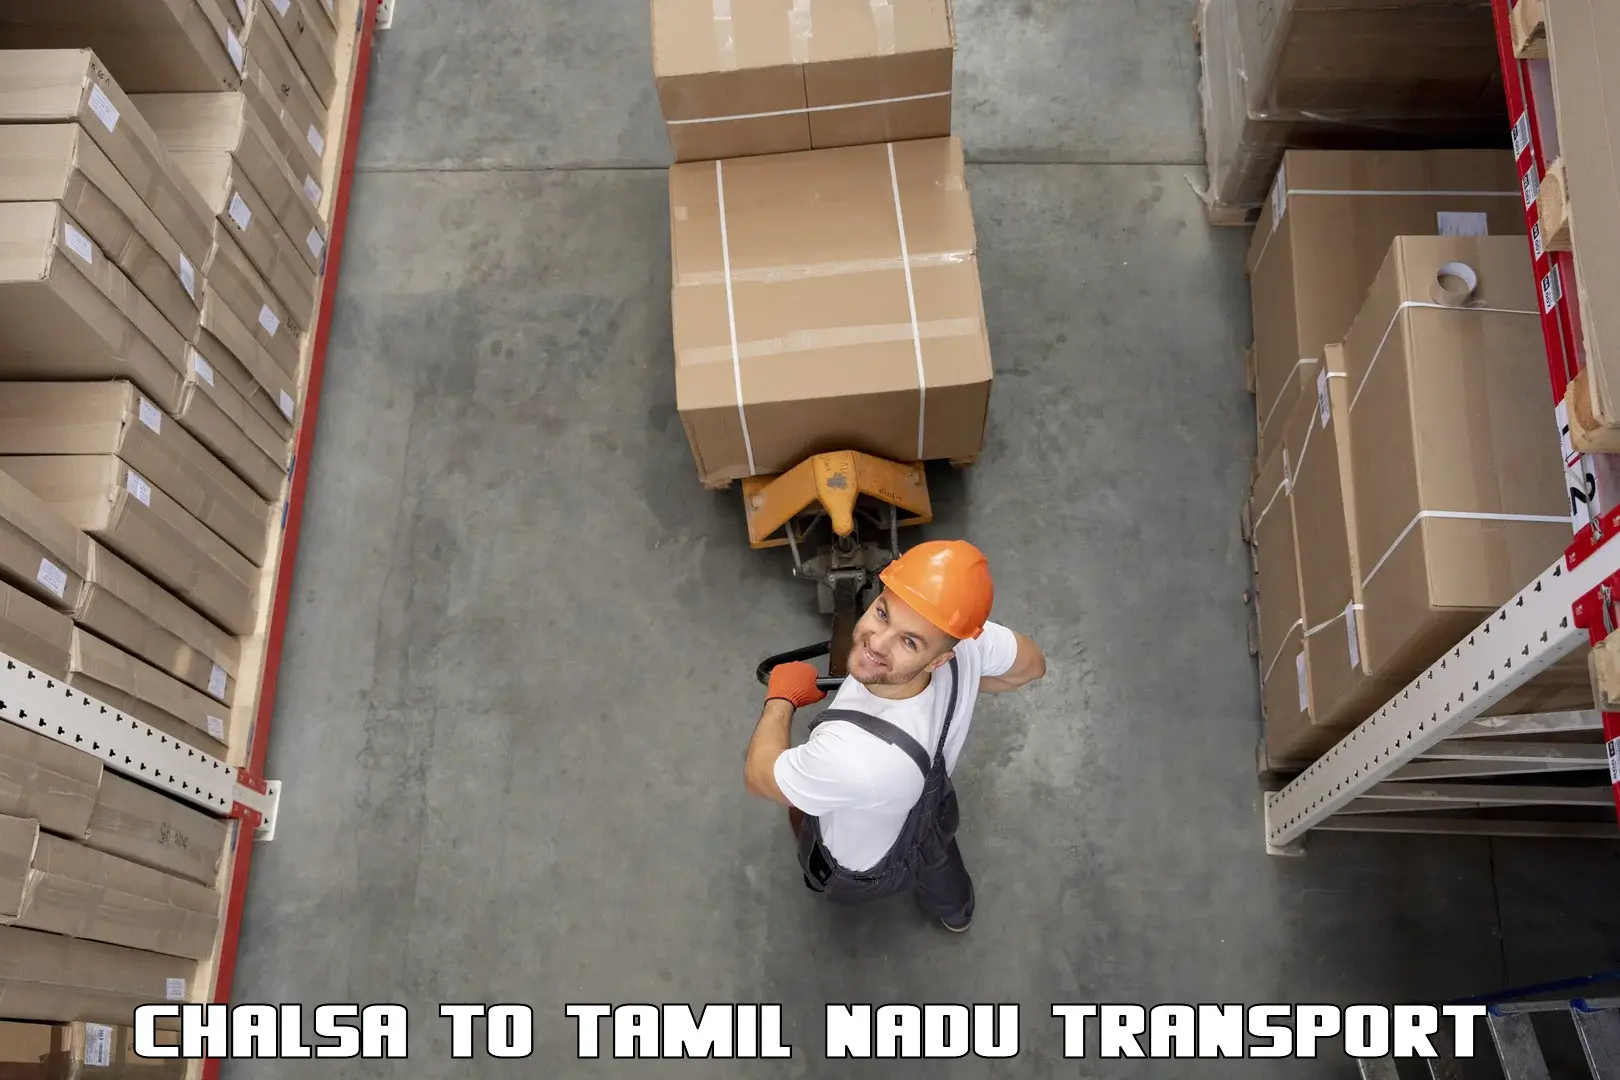 Bike transport service Chalsa to Chennai Port